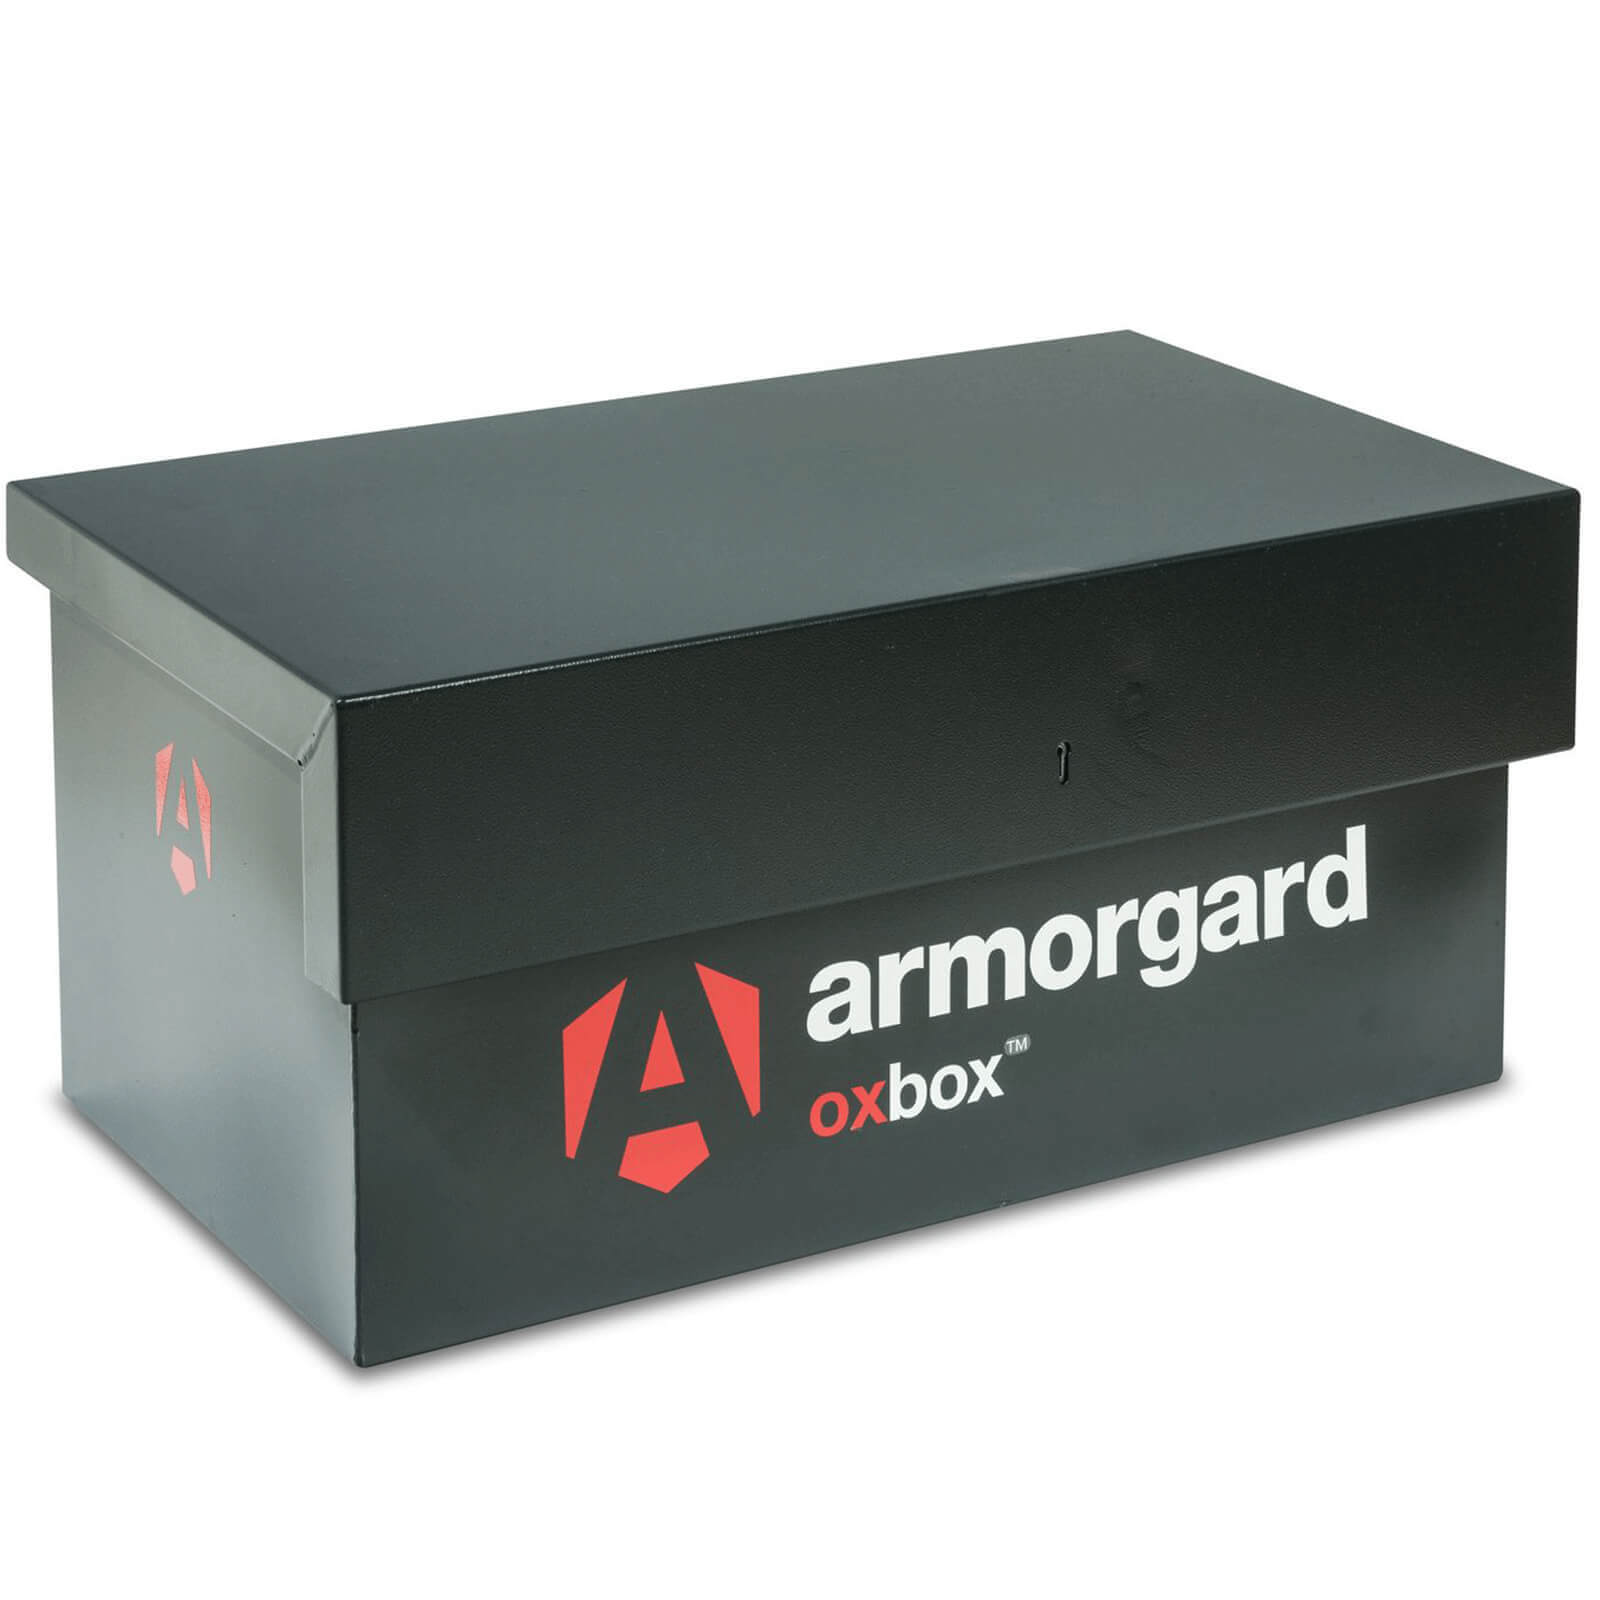 Image of Armorgard Oxbox Secure Van Storage Box 810mm 478mm 380mm